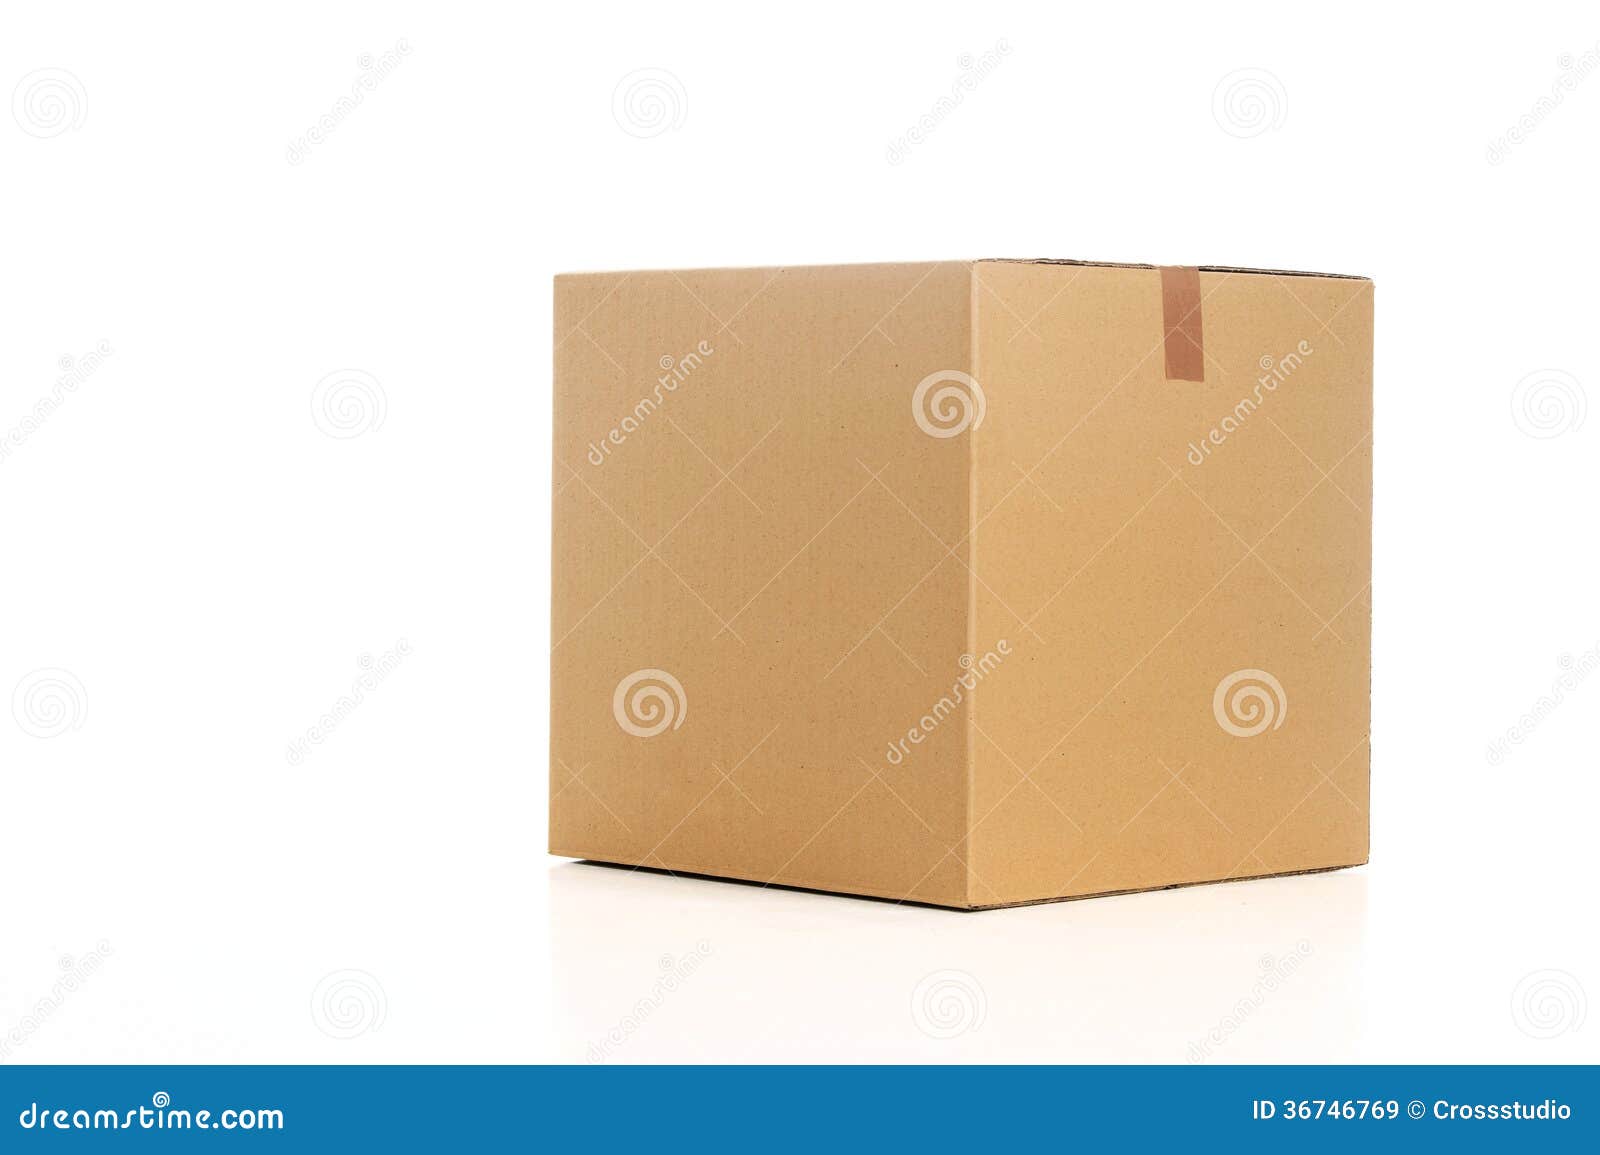 cardboard box.